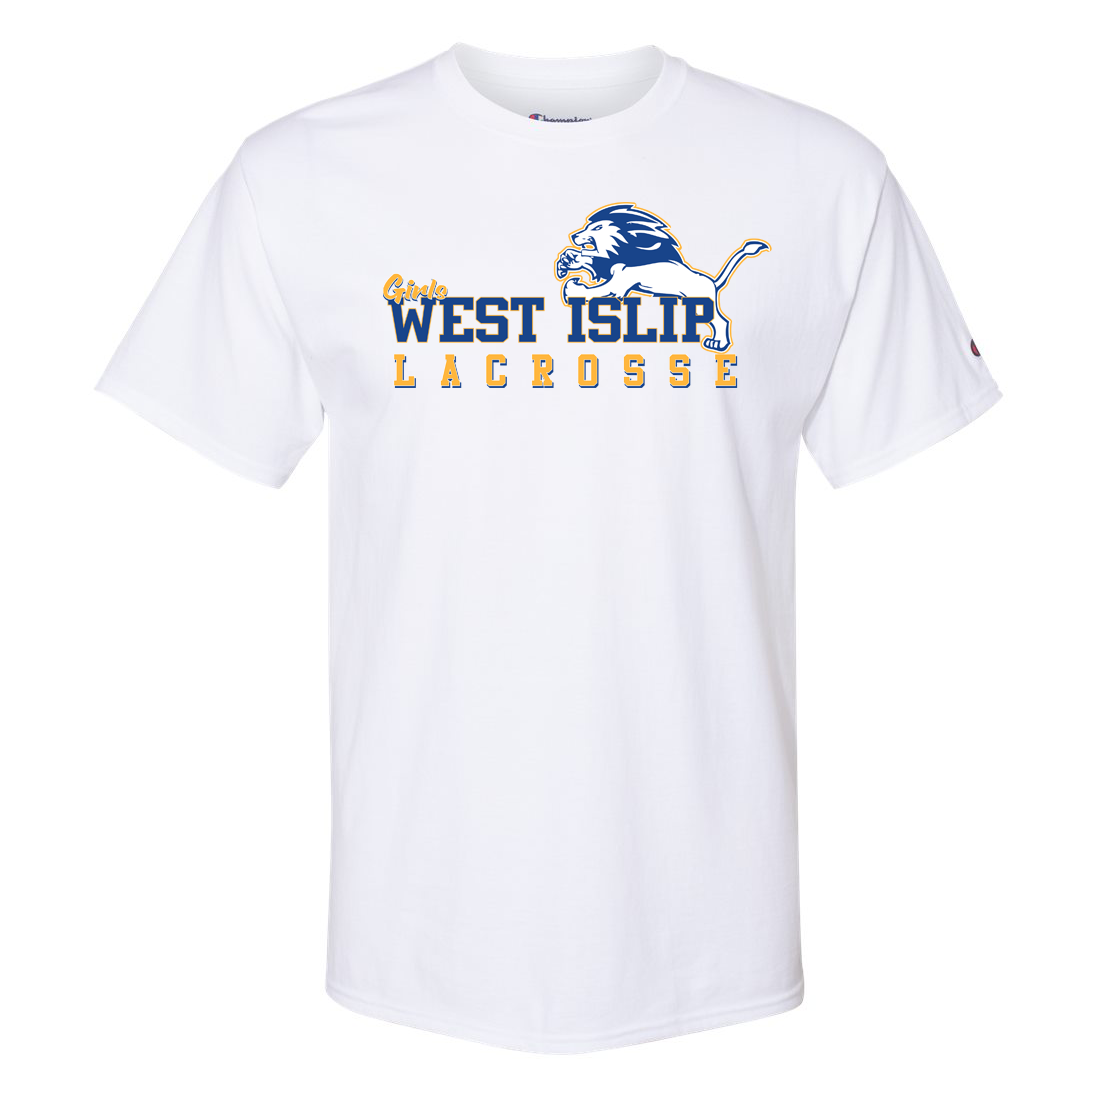 West Islip Girls Youth Lacrosse  Champion Short Sleeve T-Shirt